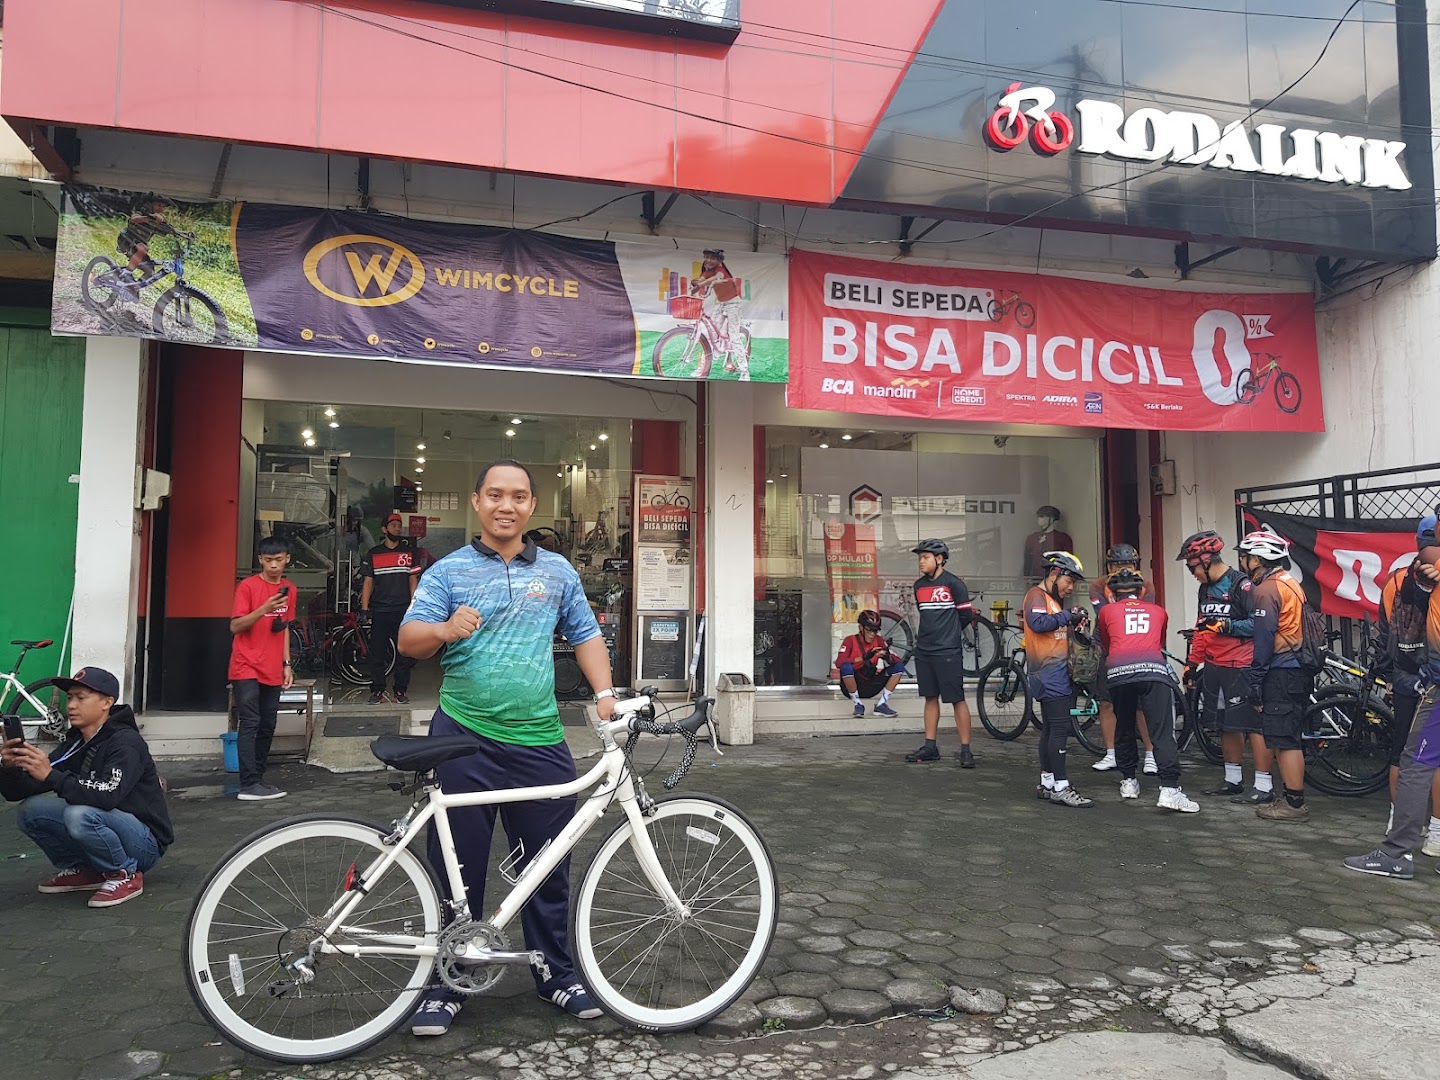 Rodalink Bandung Otista Photo